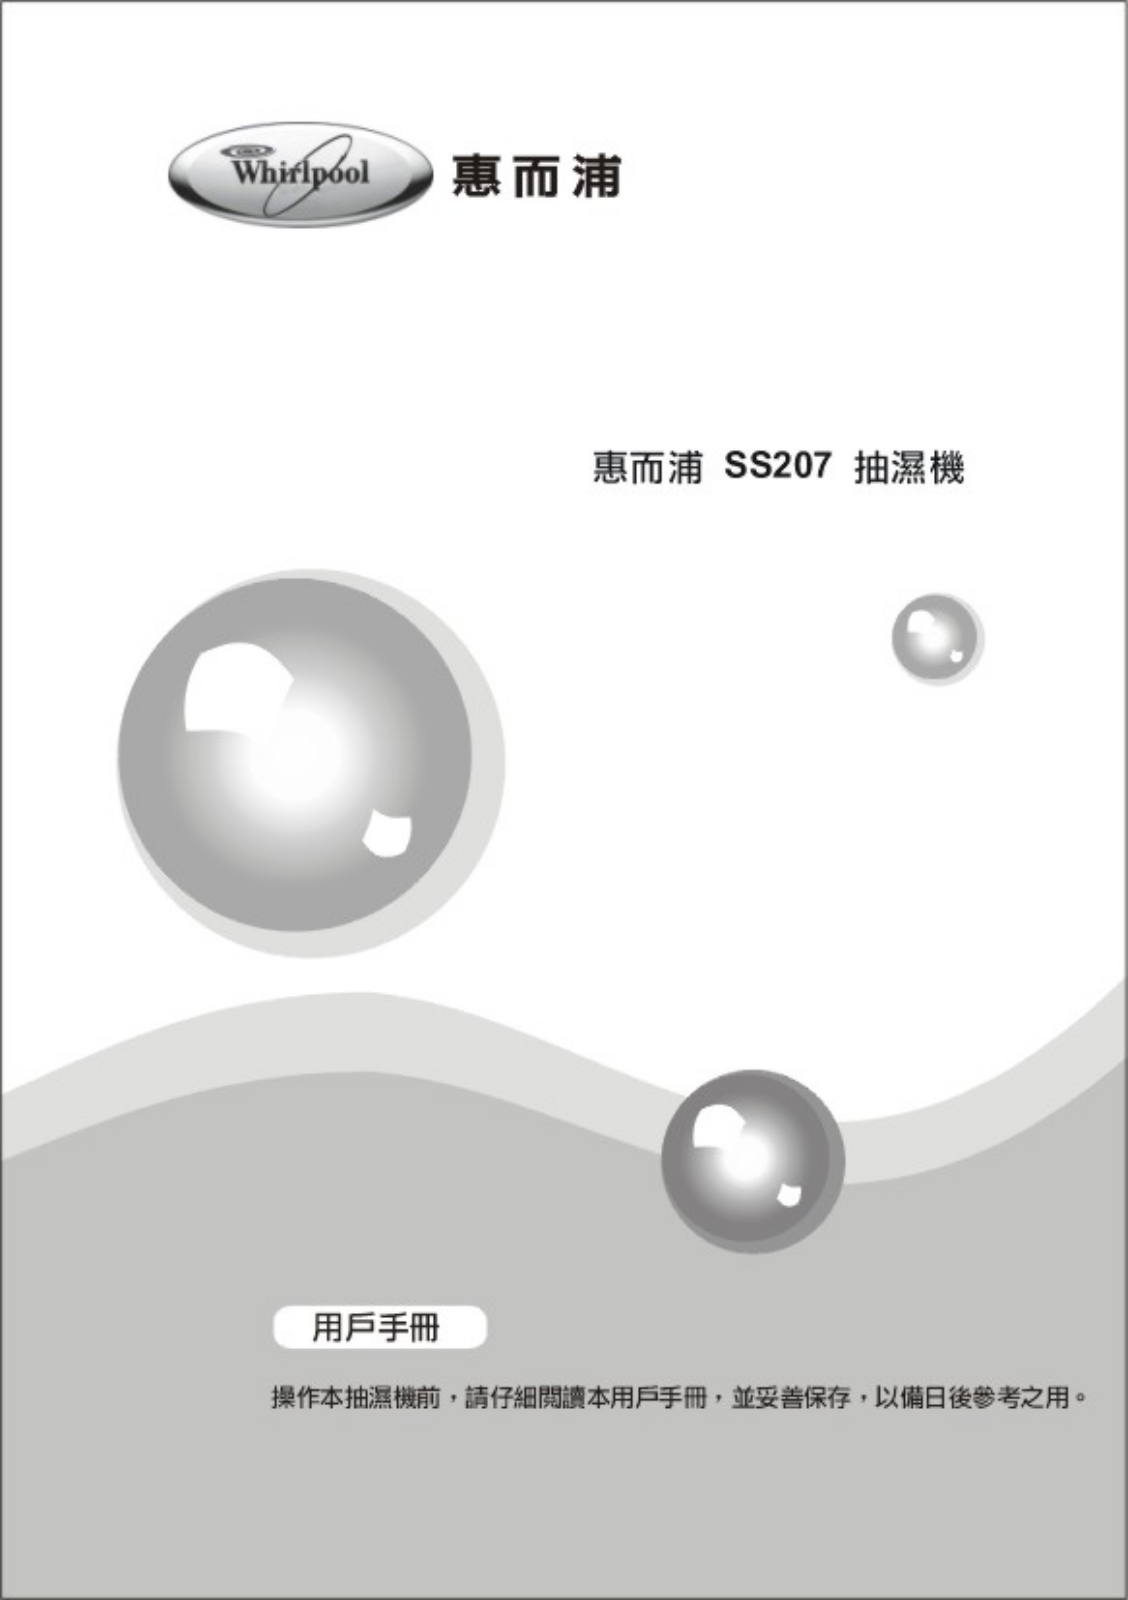 Whirlpool SS207 User Manual